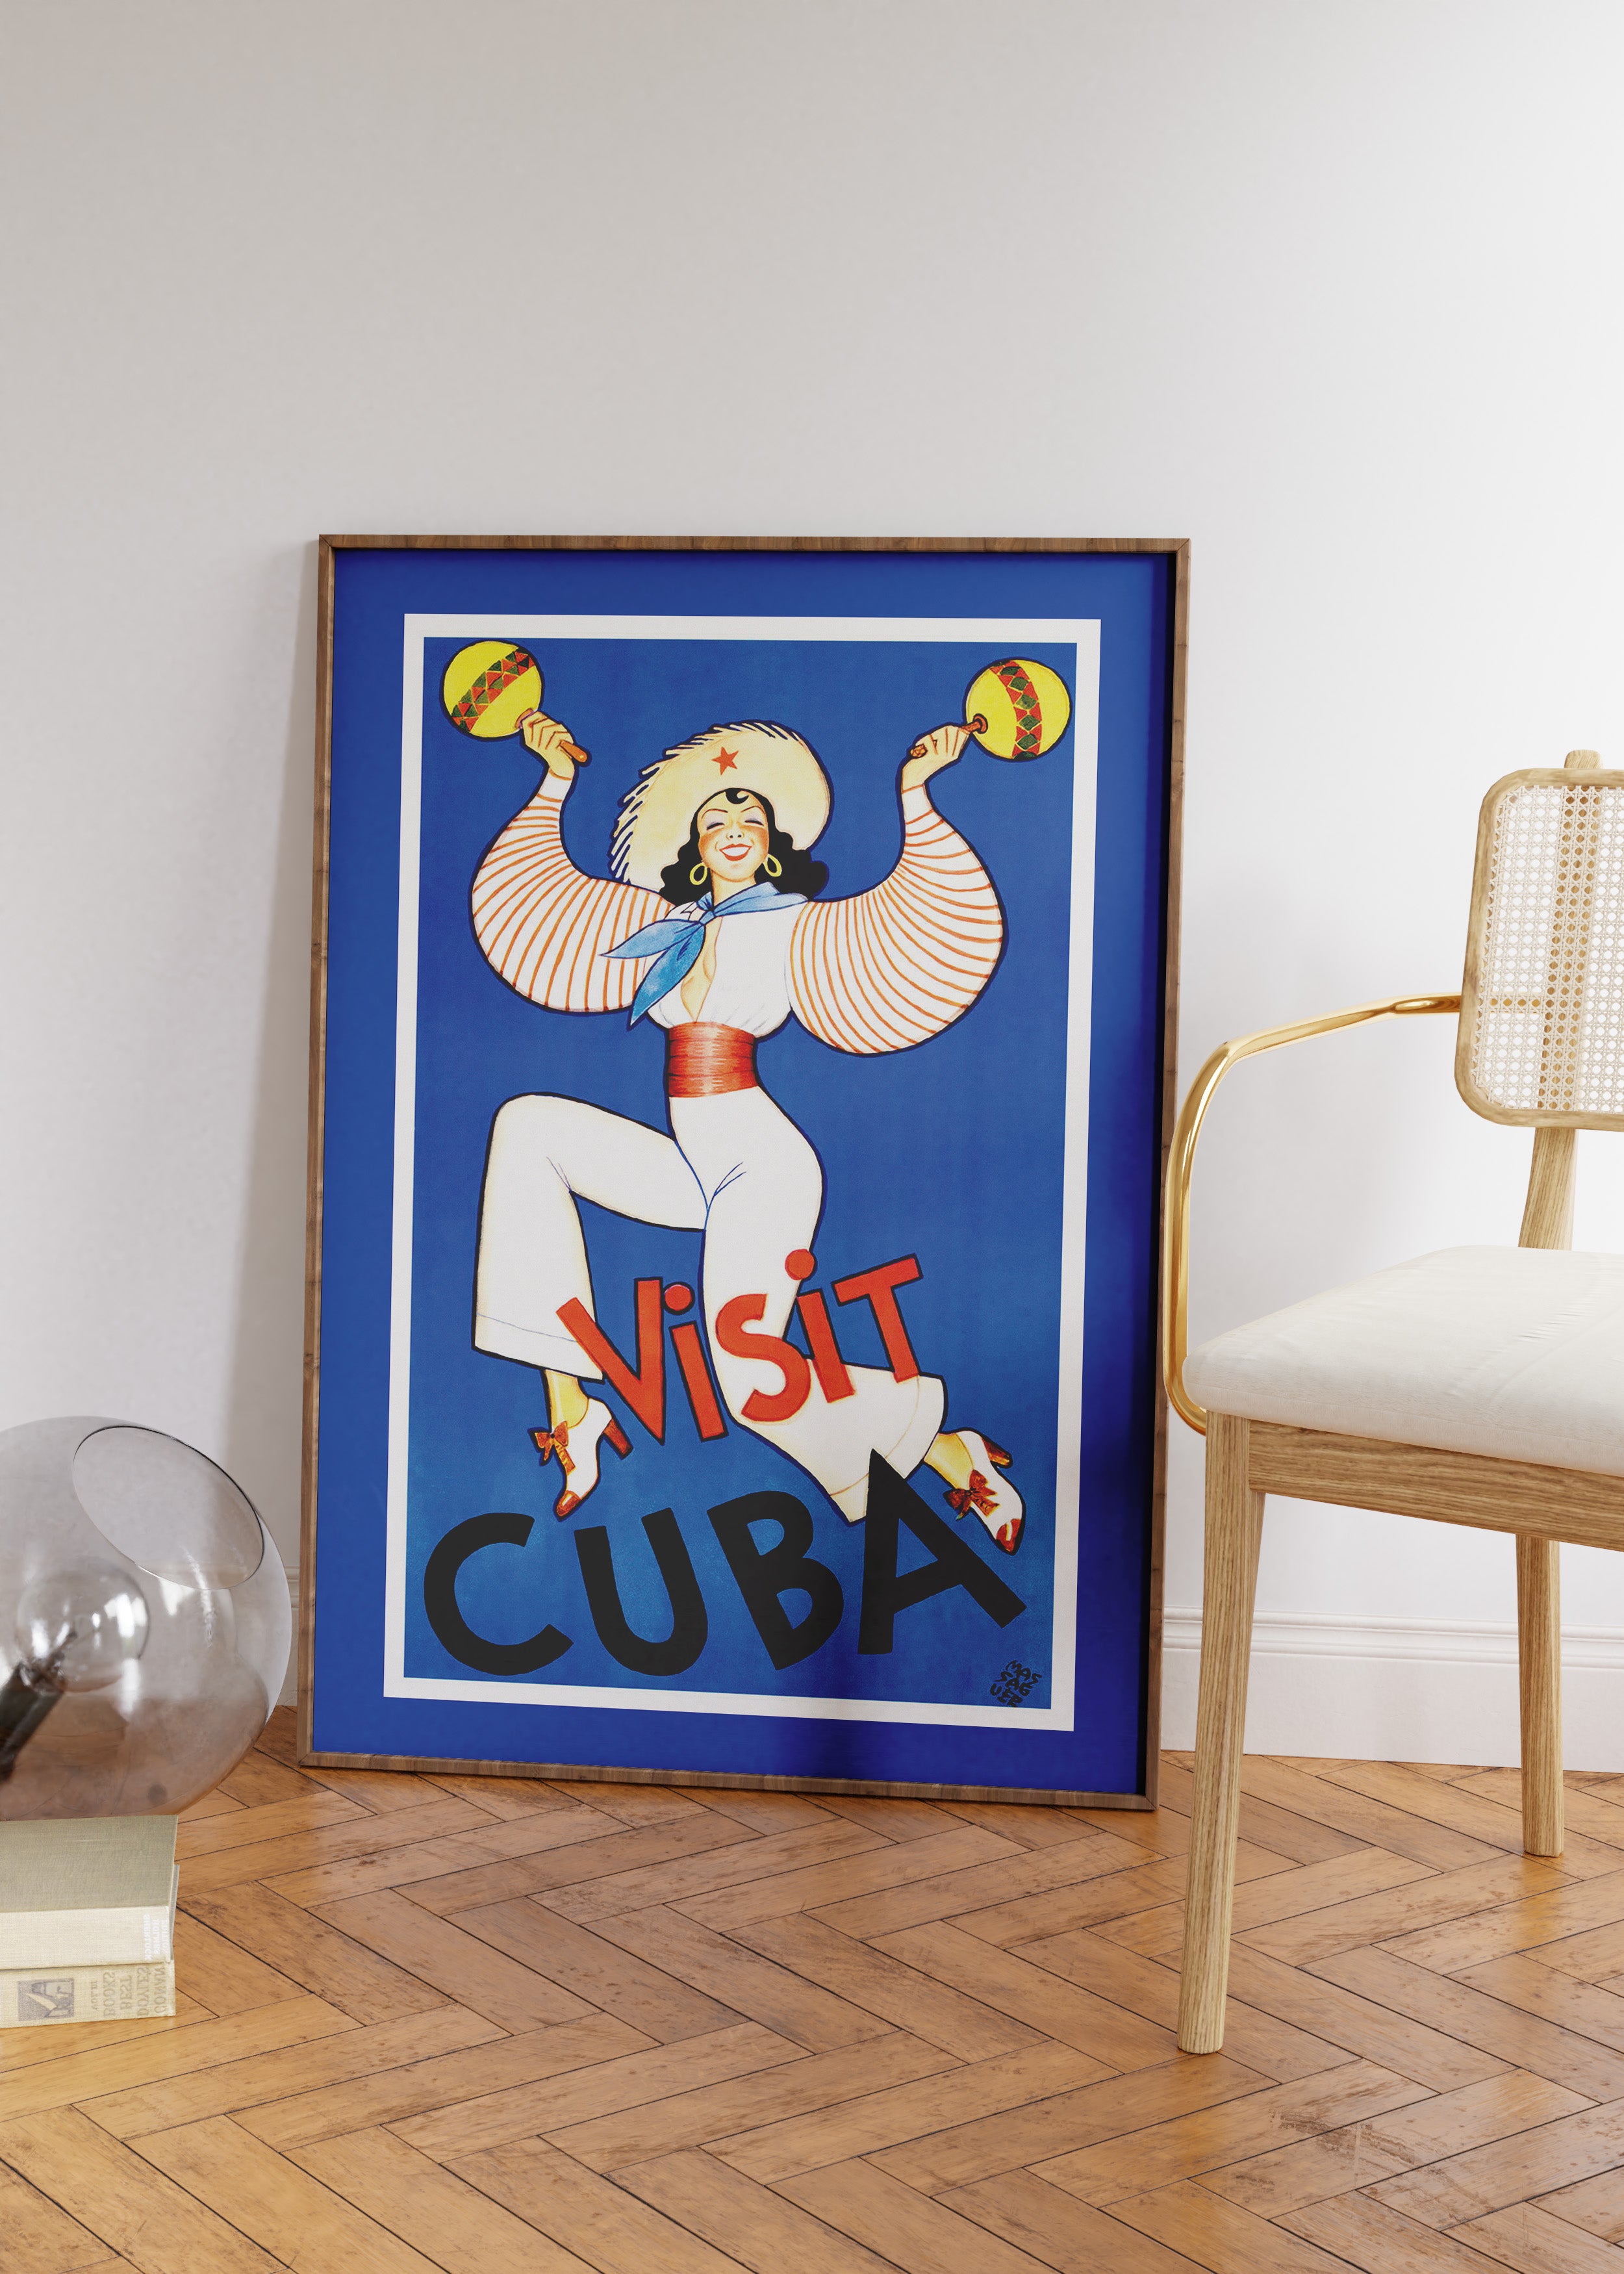 Visit Cuba Art Print